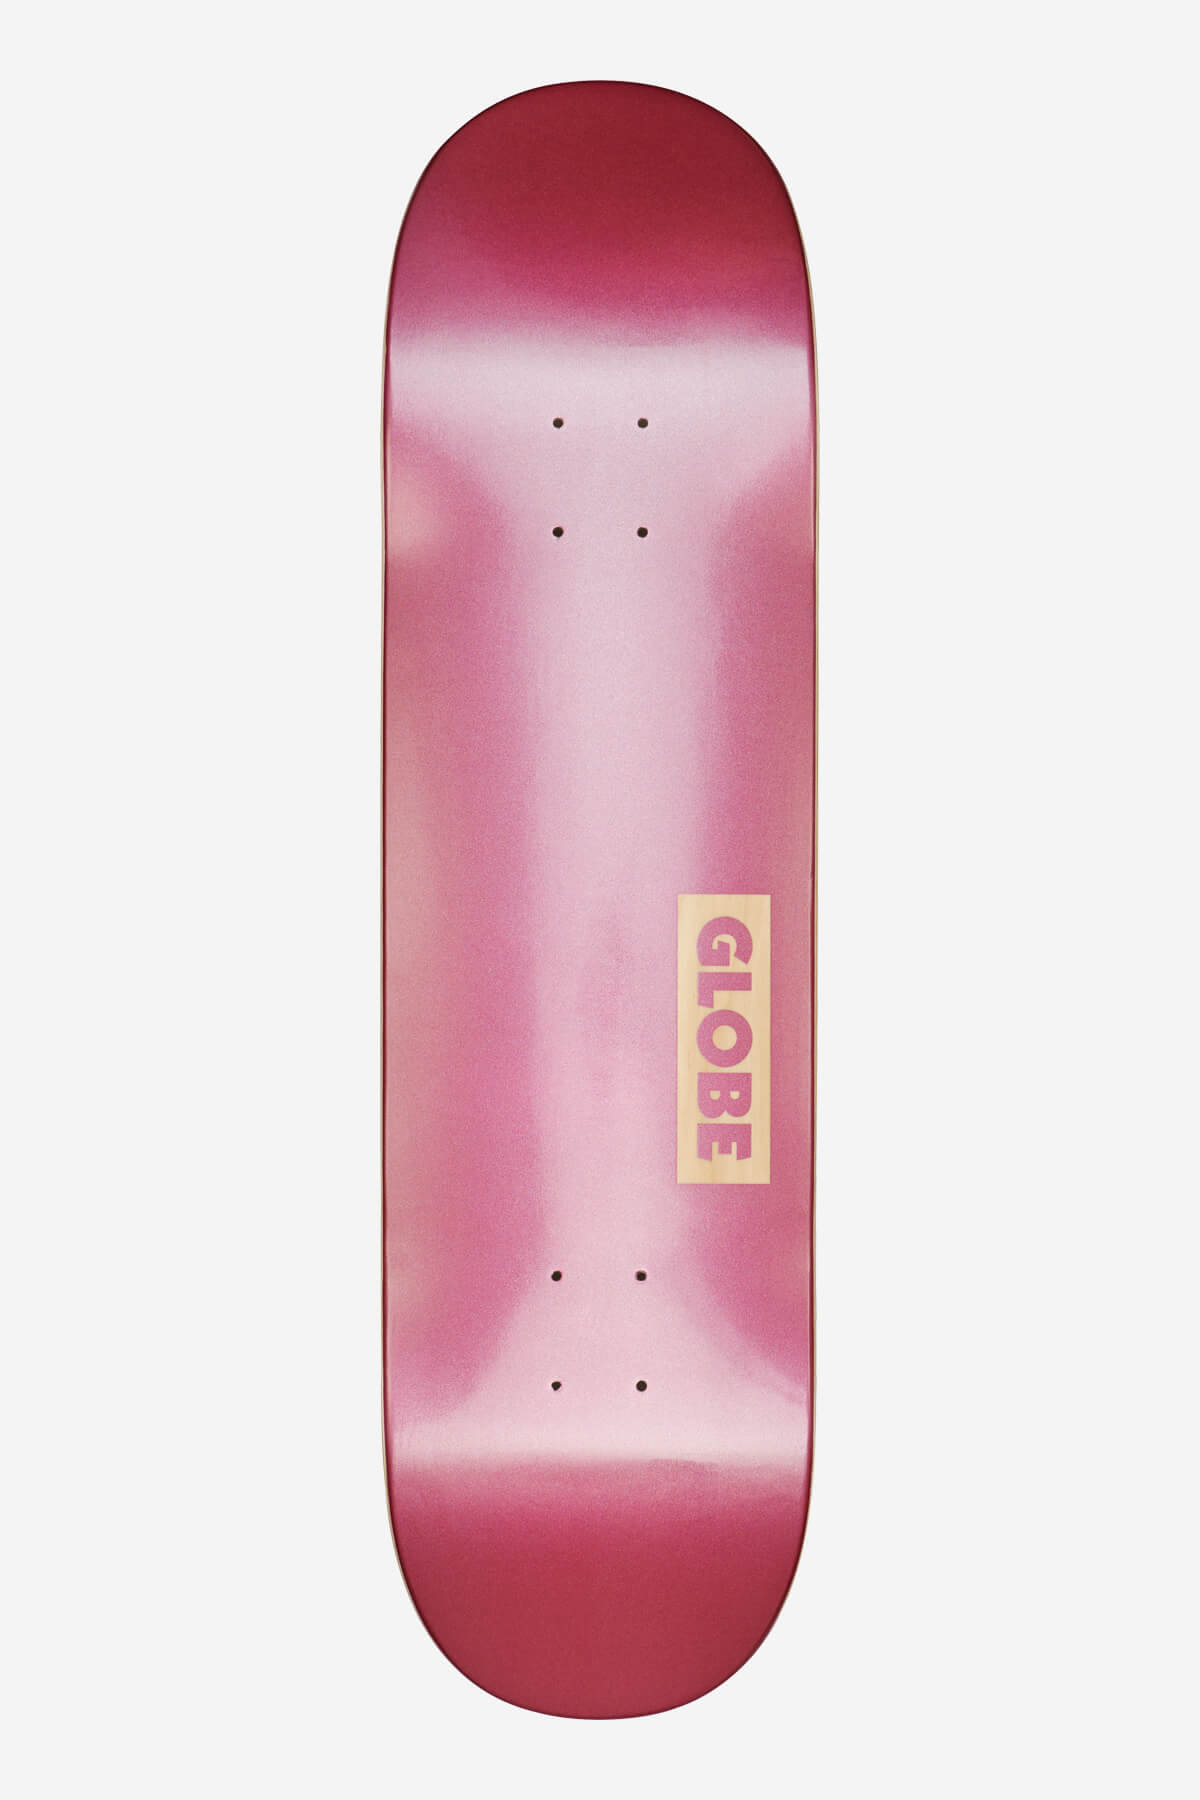 Globe - Goodstock - Ruby - Skate de 8,5 polegadas Deck